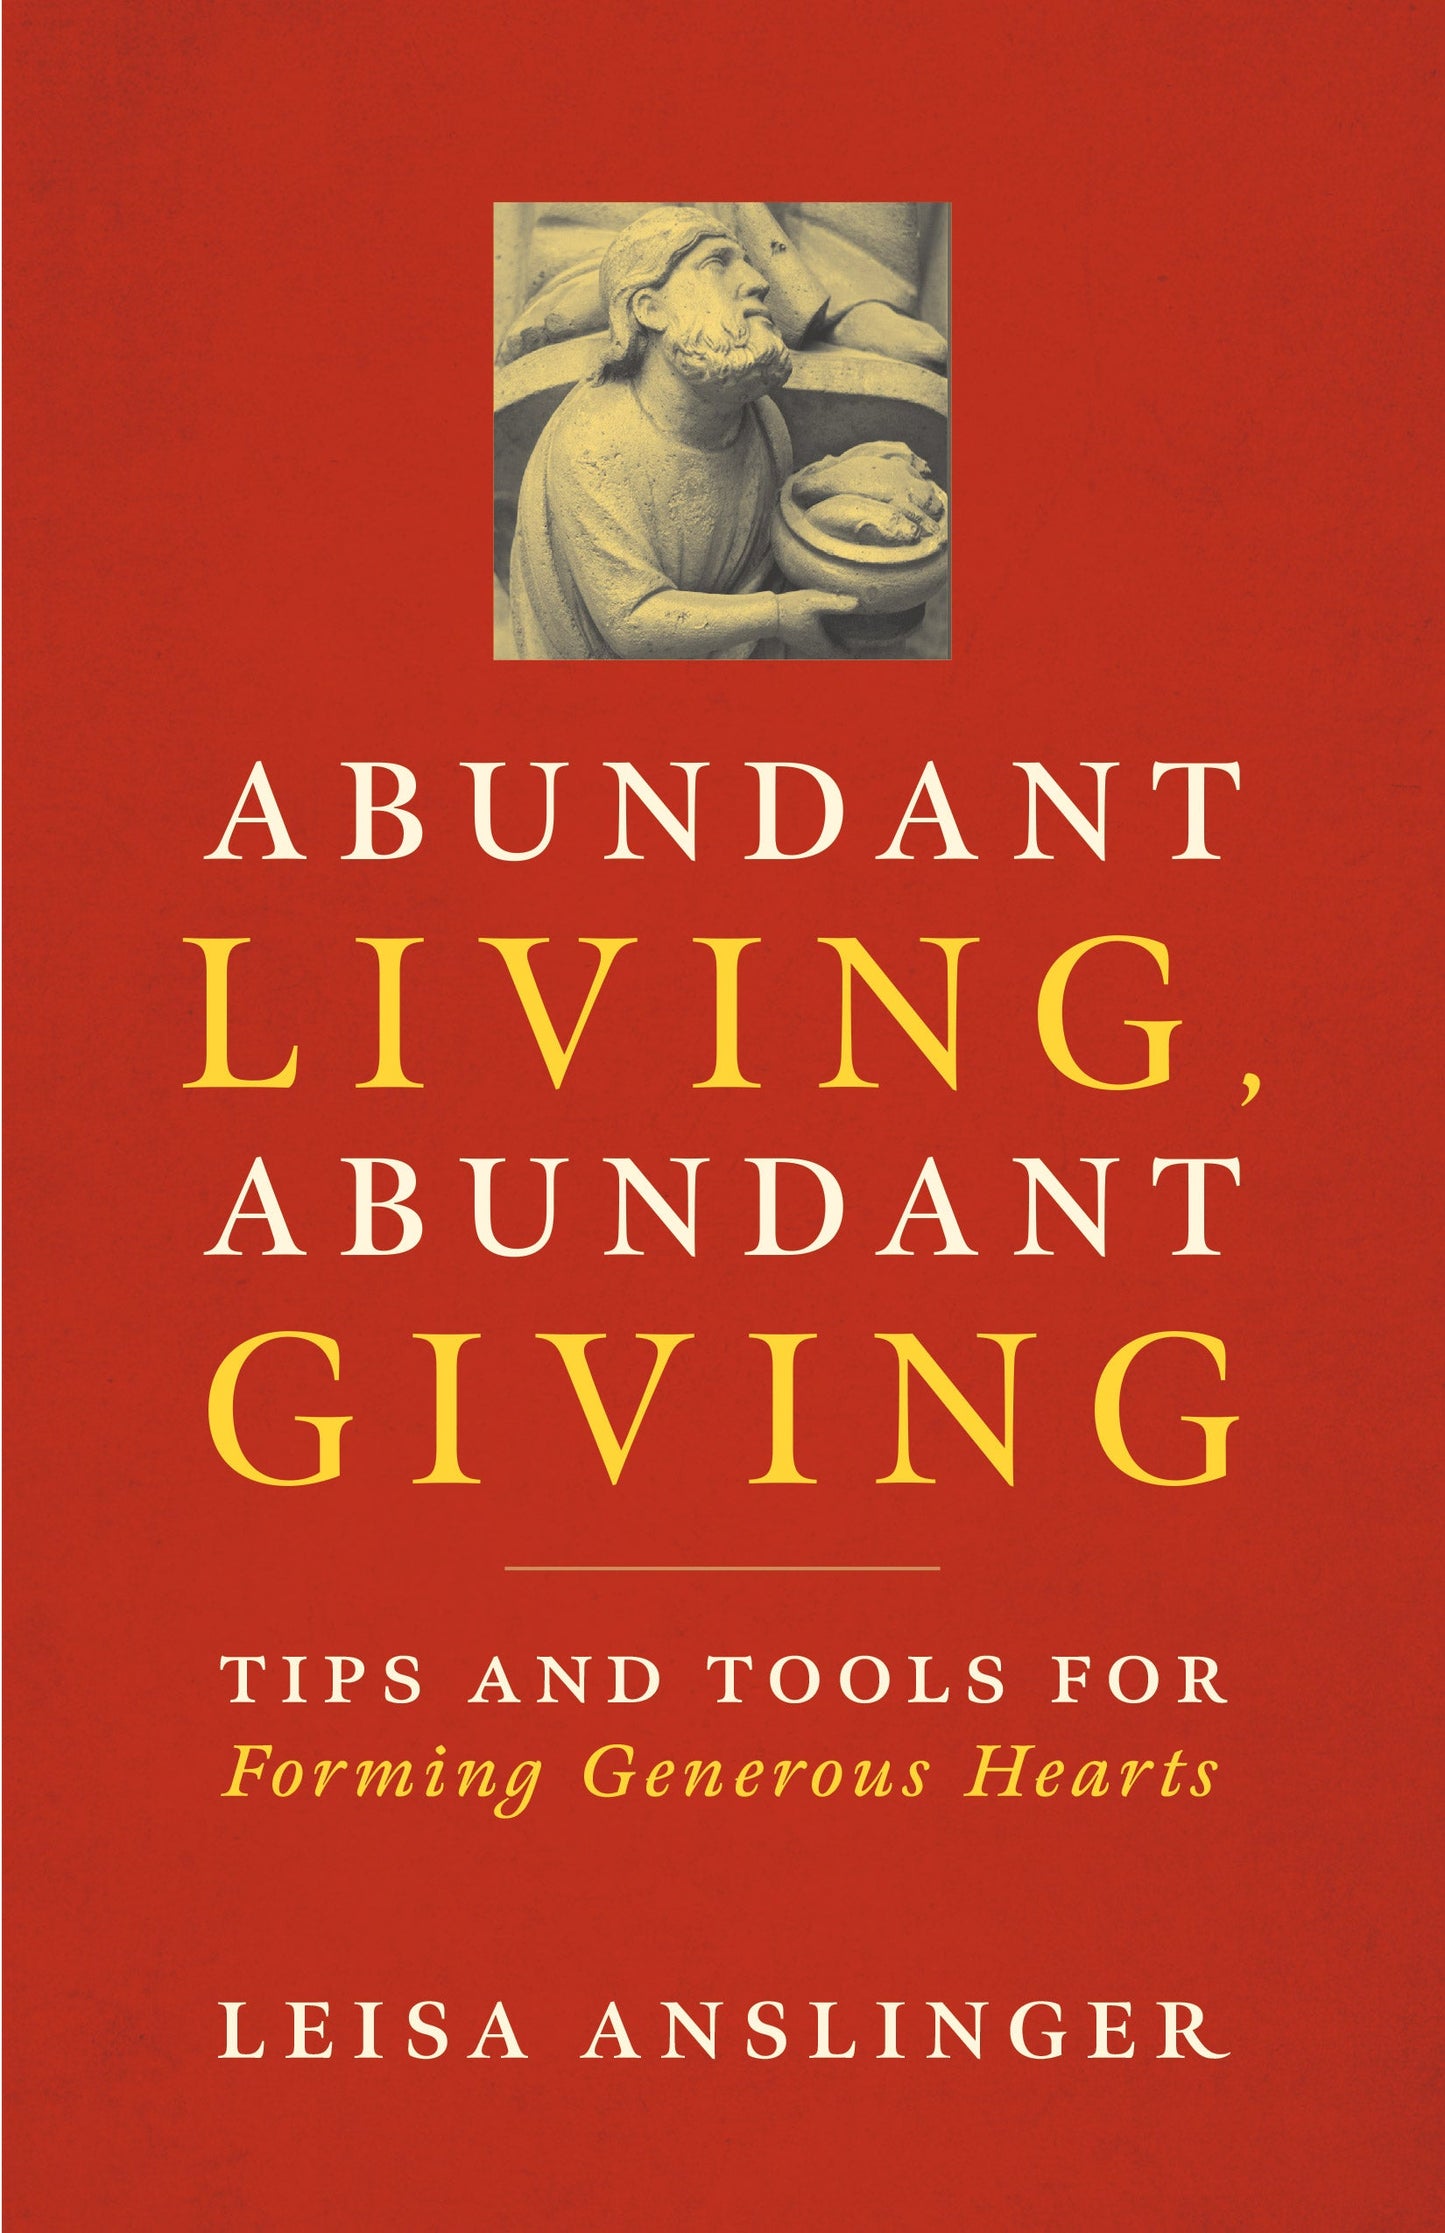 SALE - Abundant Living, Abundant Giving